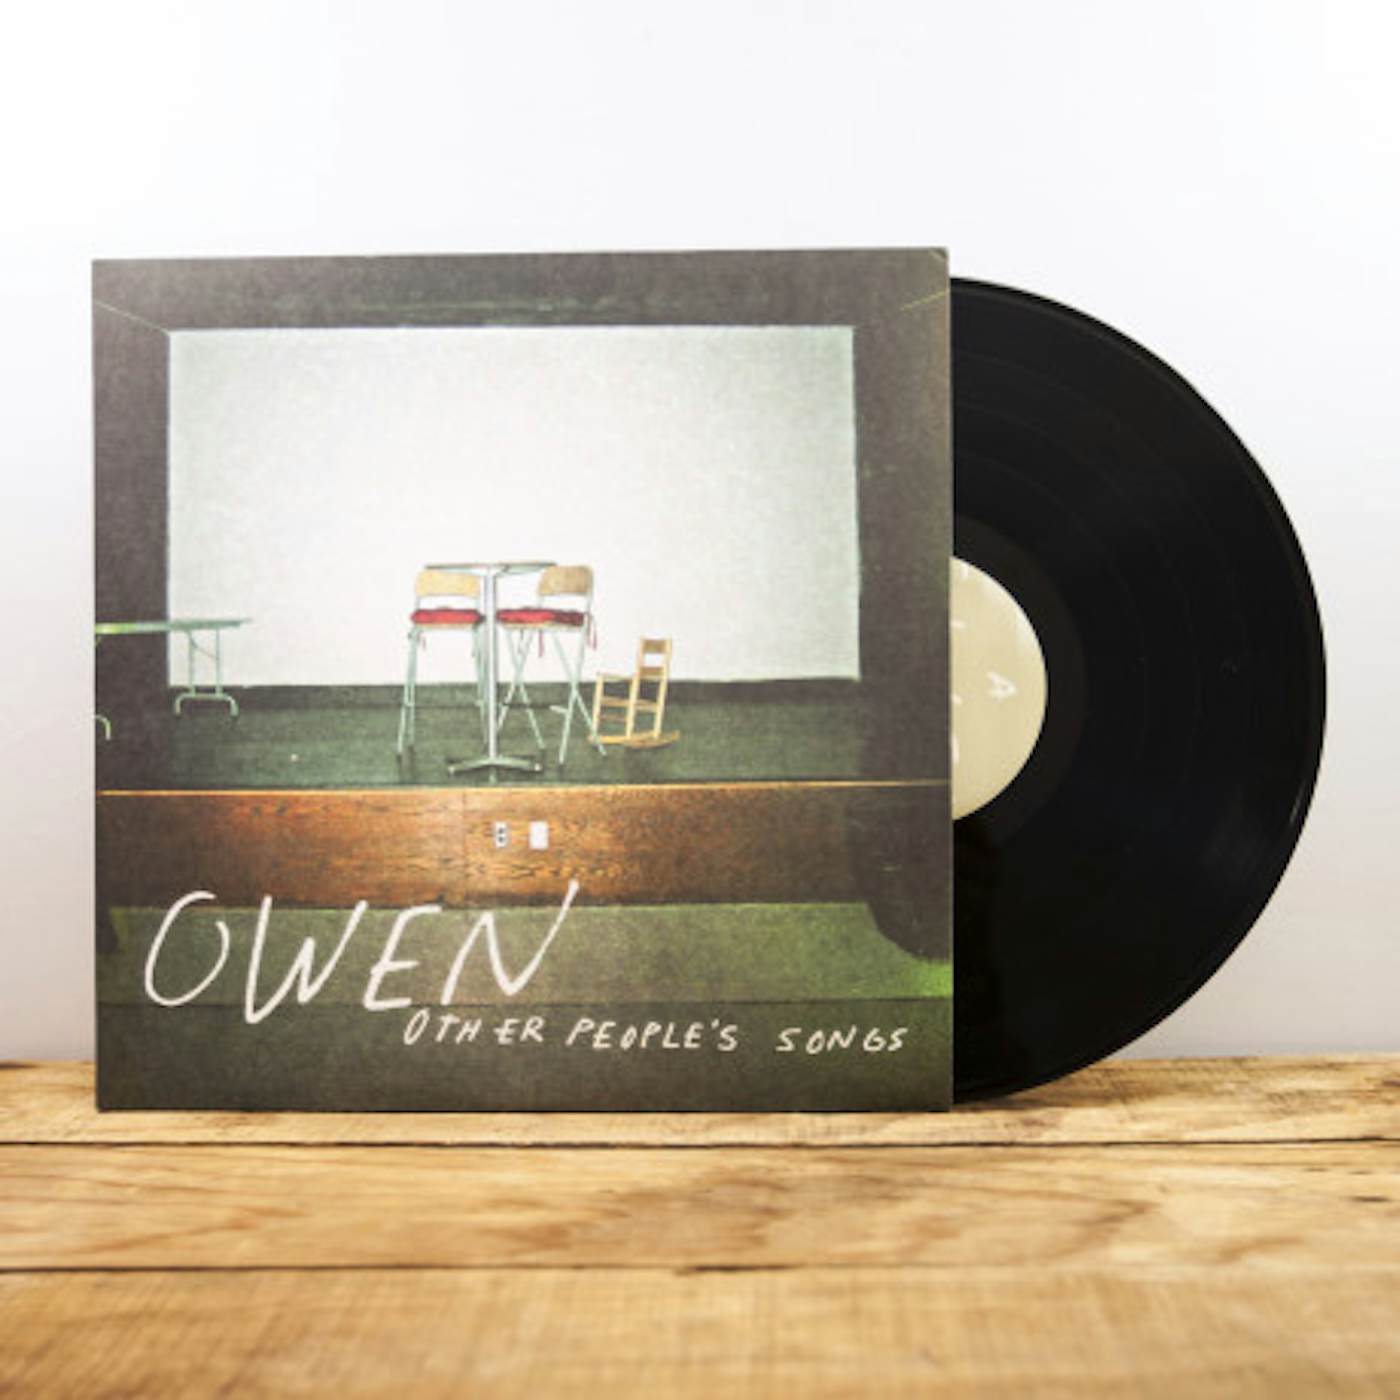 Owen Other People's Songs (Vinyl)